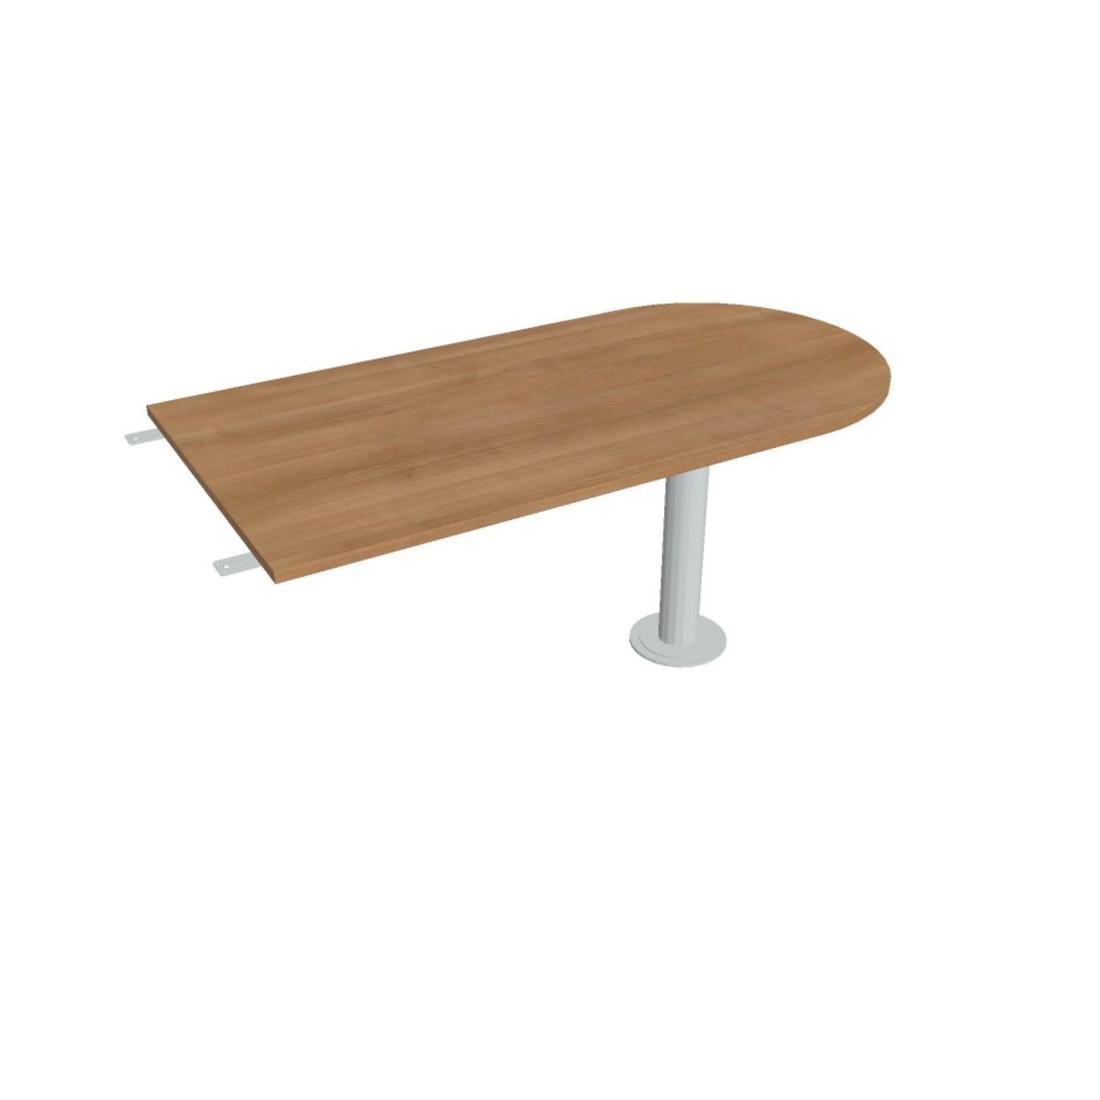 Přídavný stůl Hobis Flex FP 1600 3 - višeň/kov 160 x 80 x 75 cm